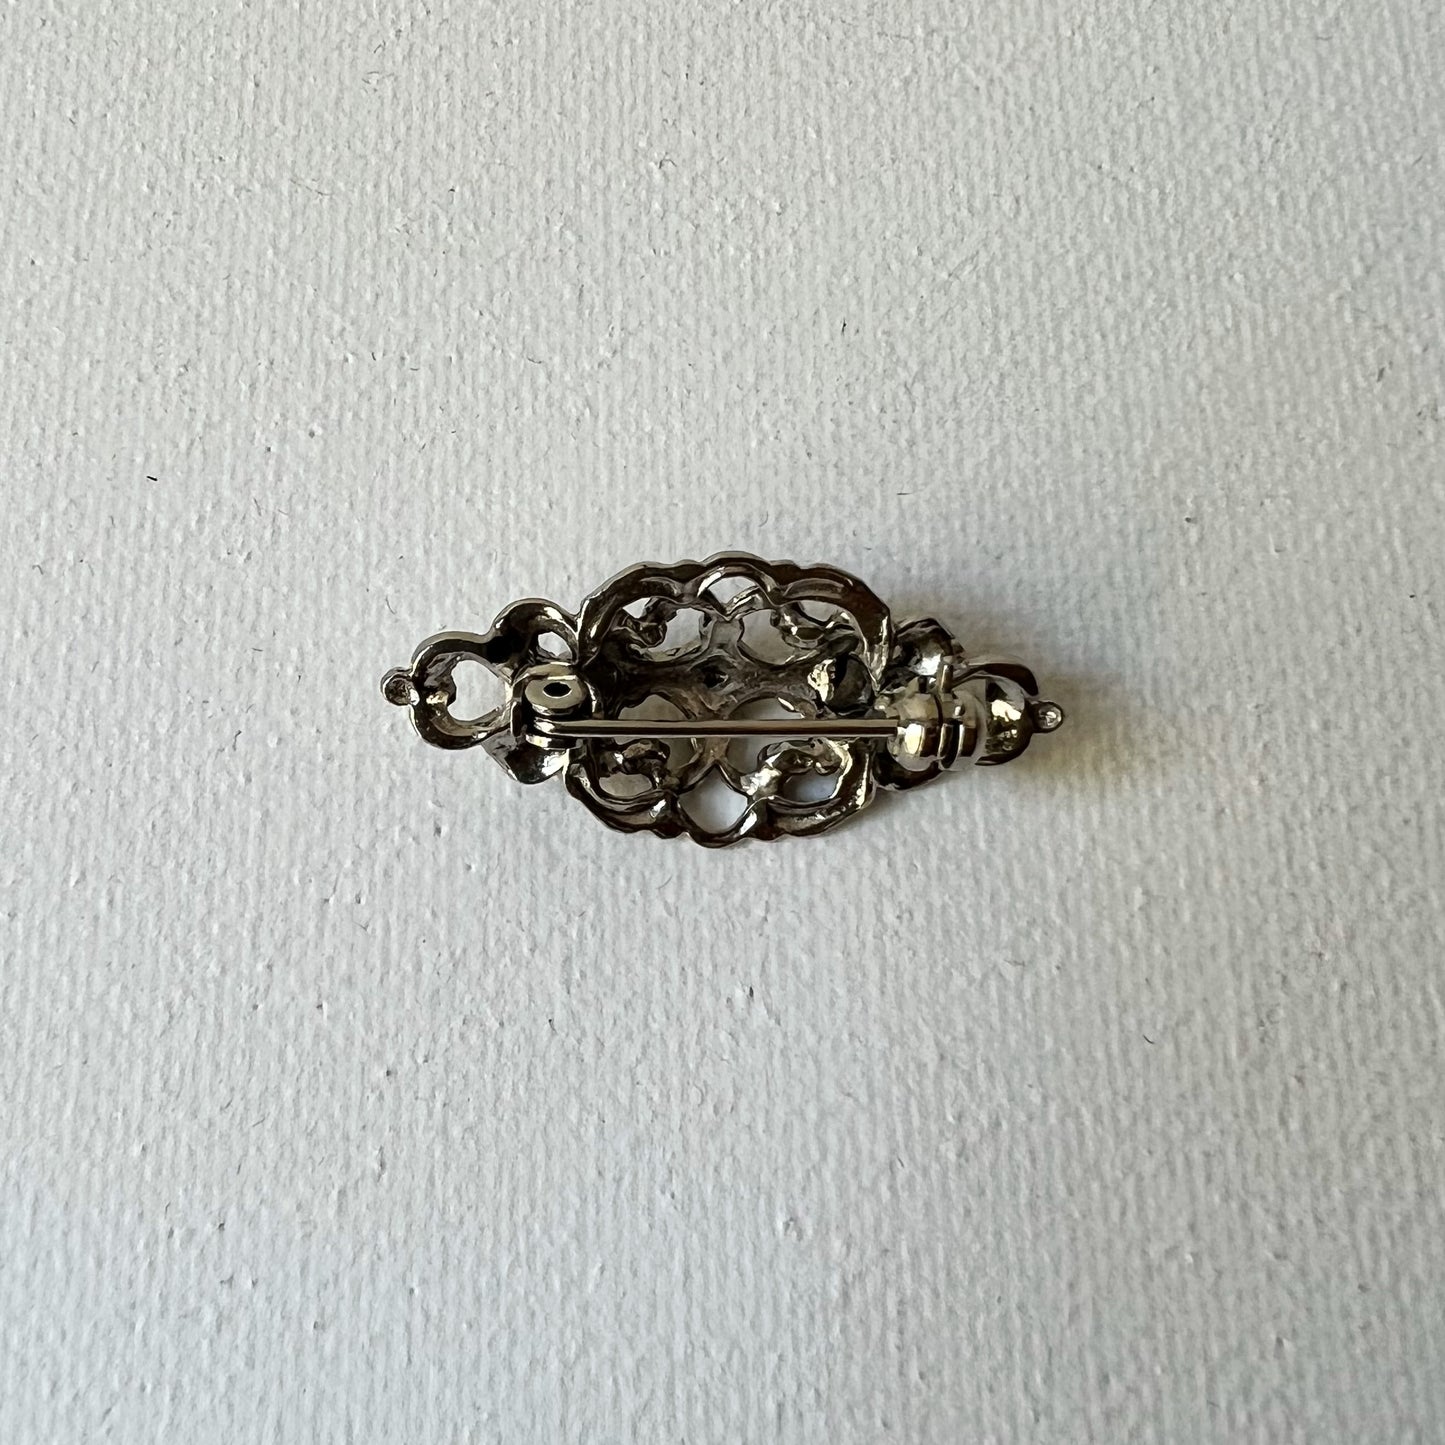 【Antique】1900s Silver Garnet Brooch